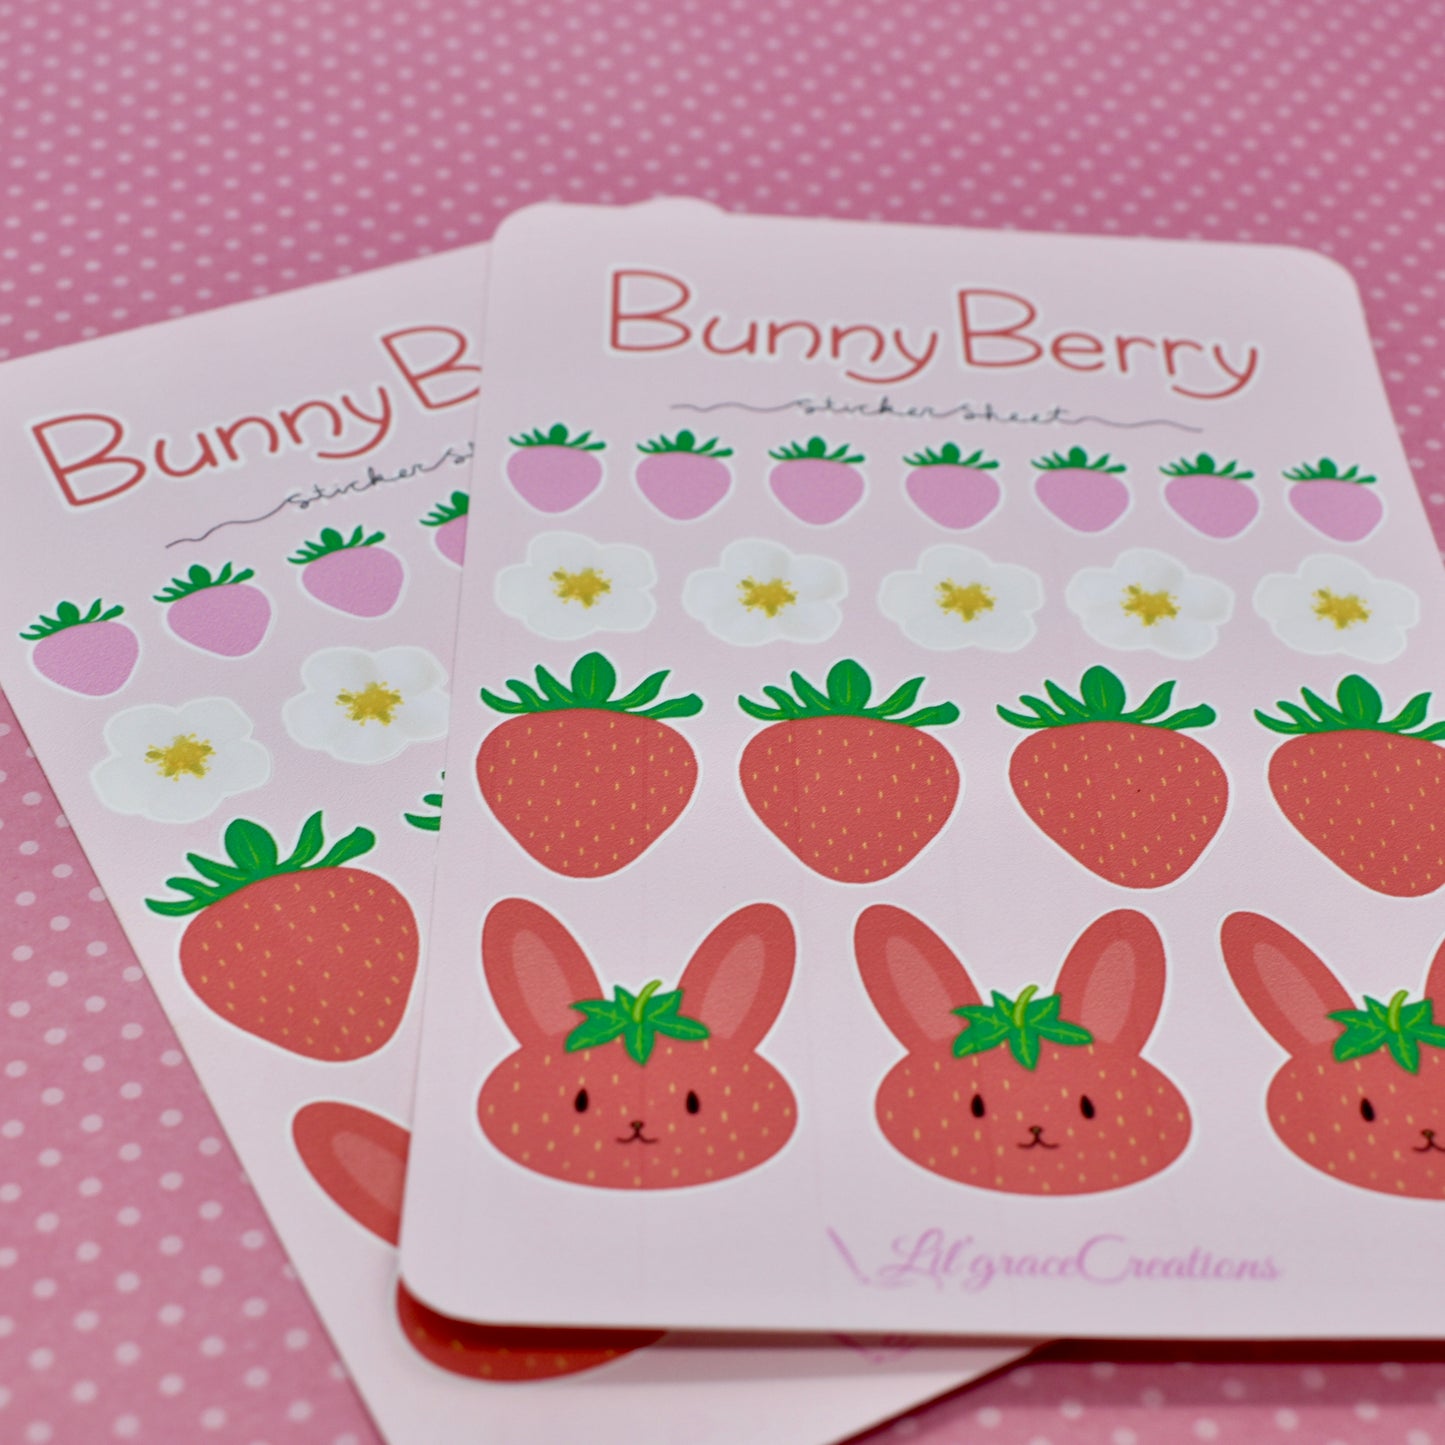 Berry Bunny Sticker Sheet